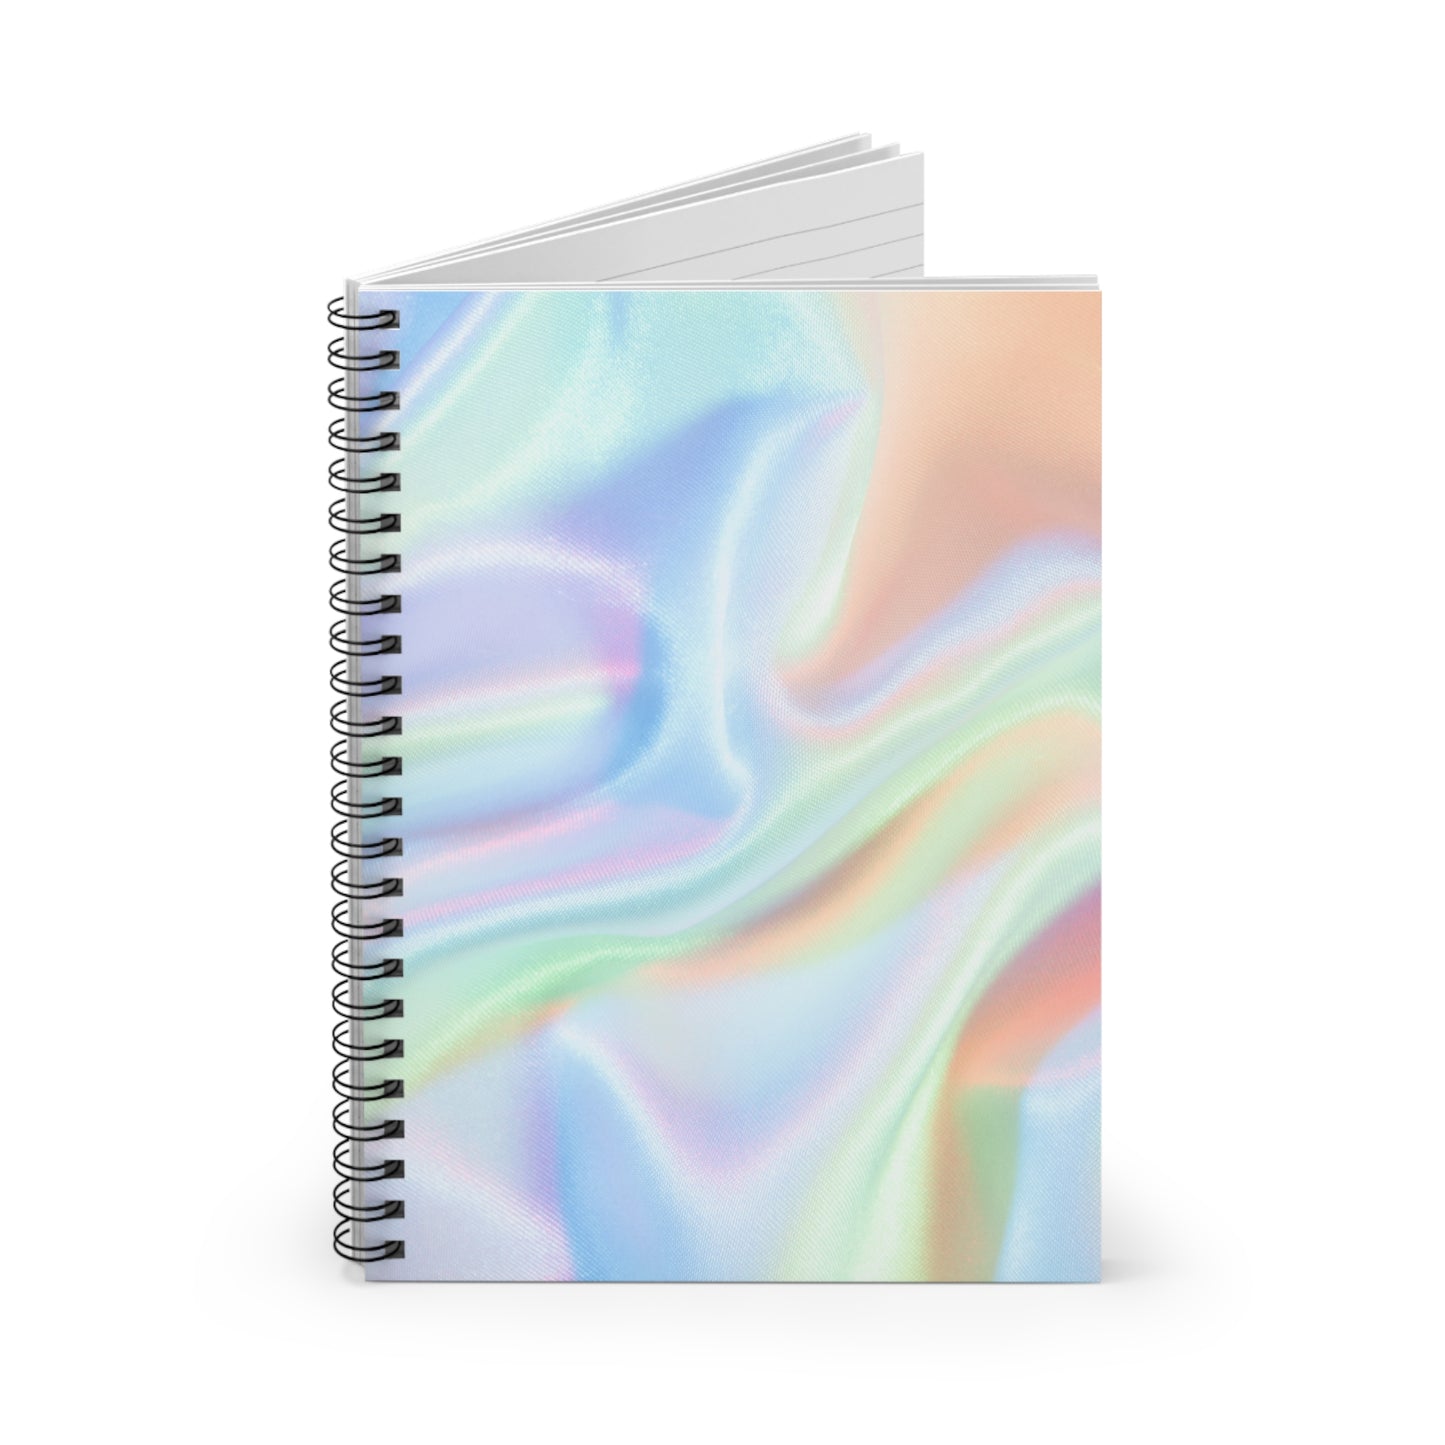 Vibrant Mosaics - The Alien Spiral Notebook (Ruled Line)